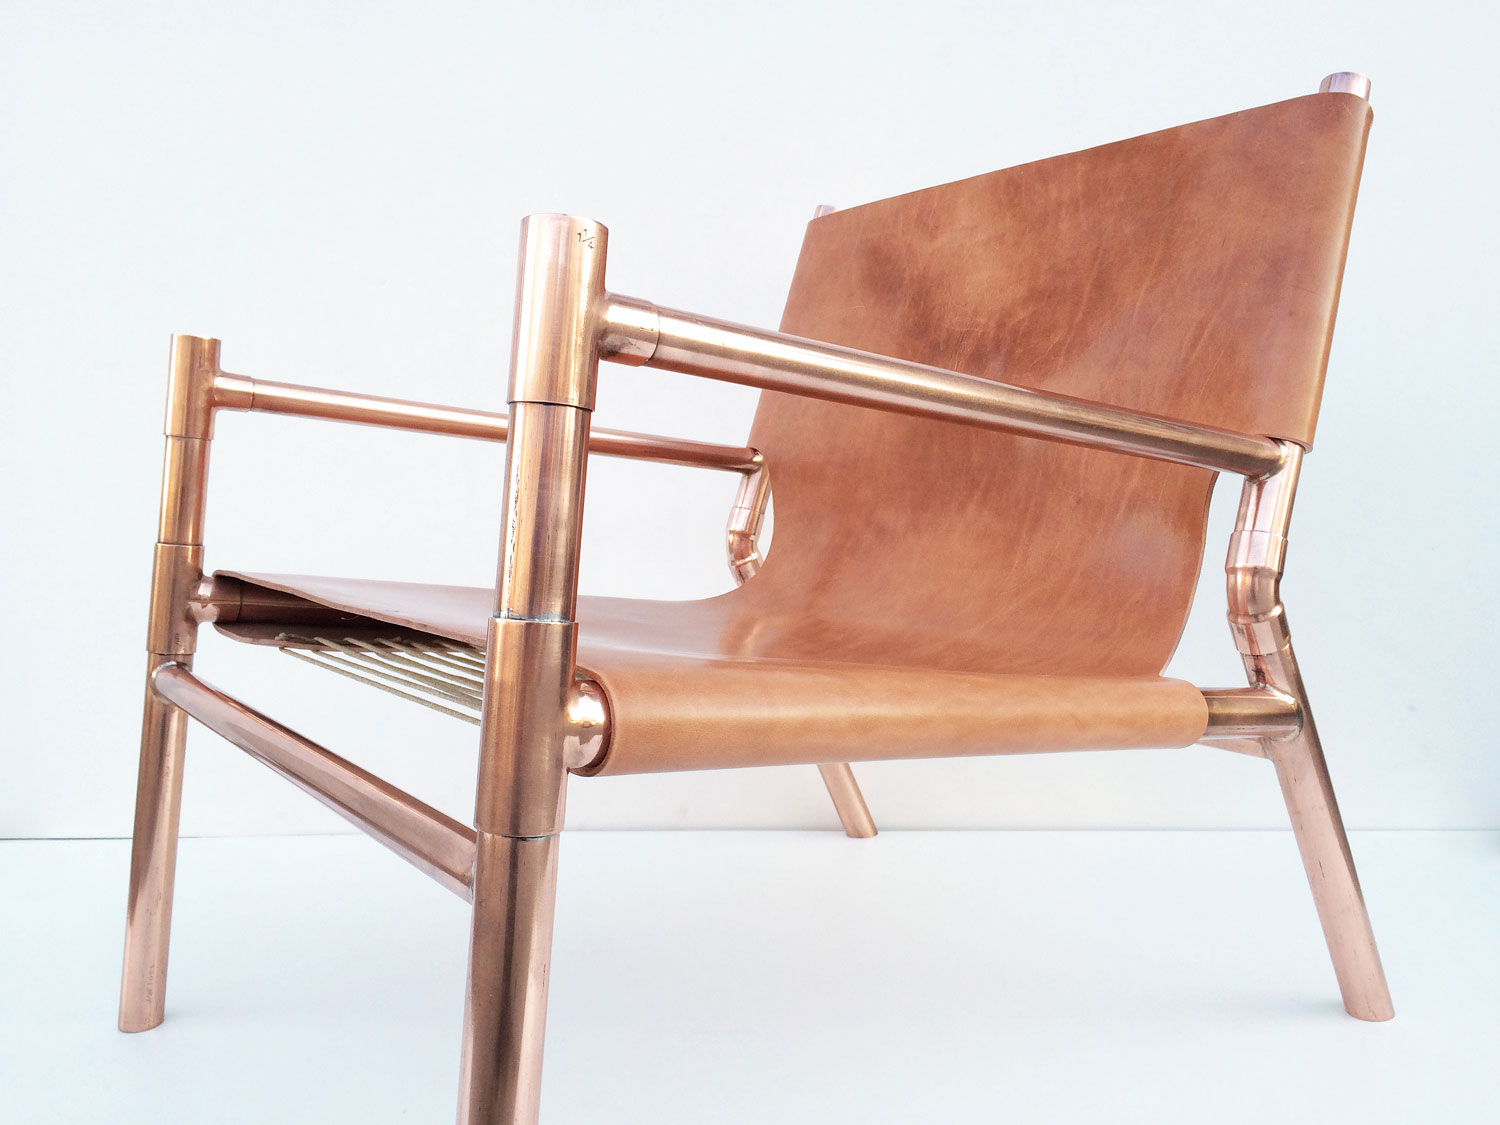 copper chair stance.jpg